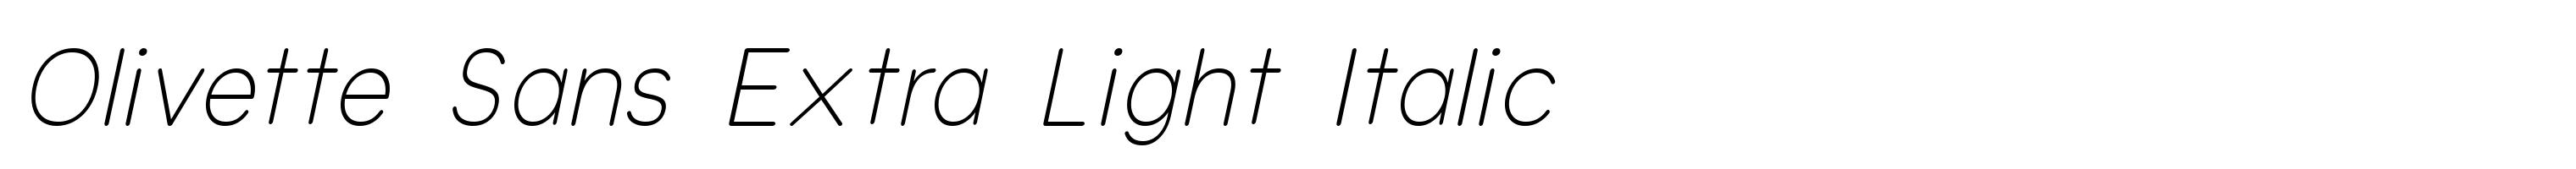 Olivette Sans Extra Light Italic